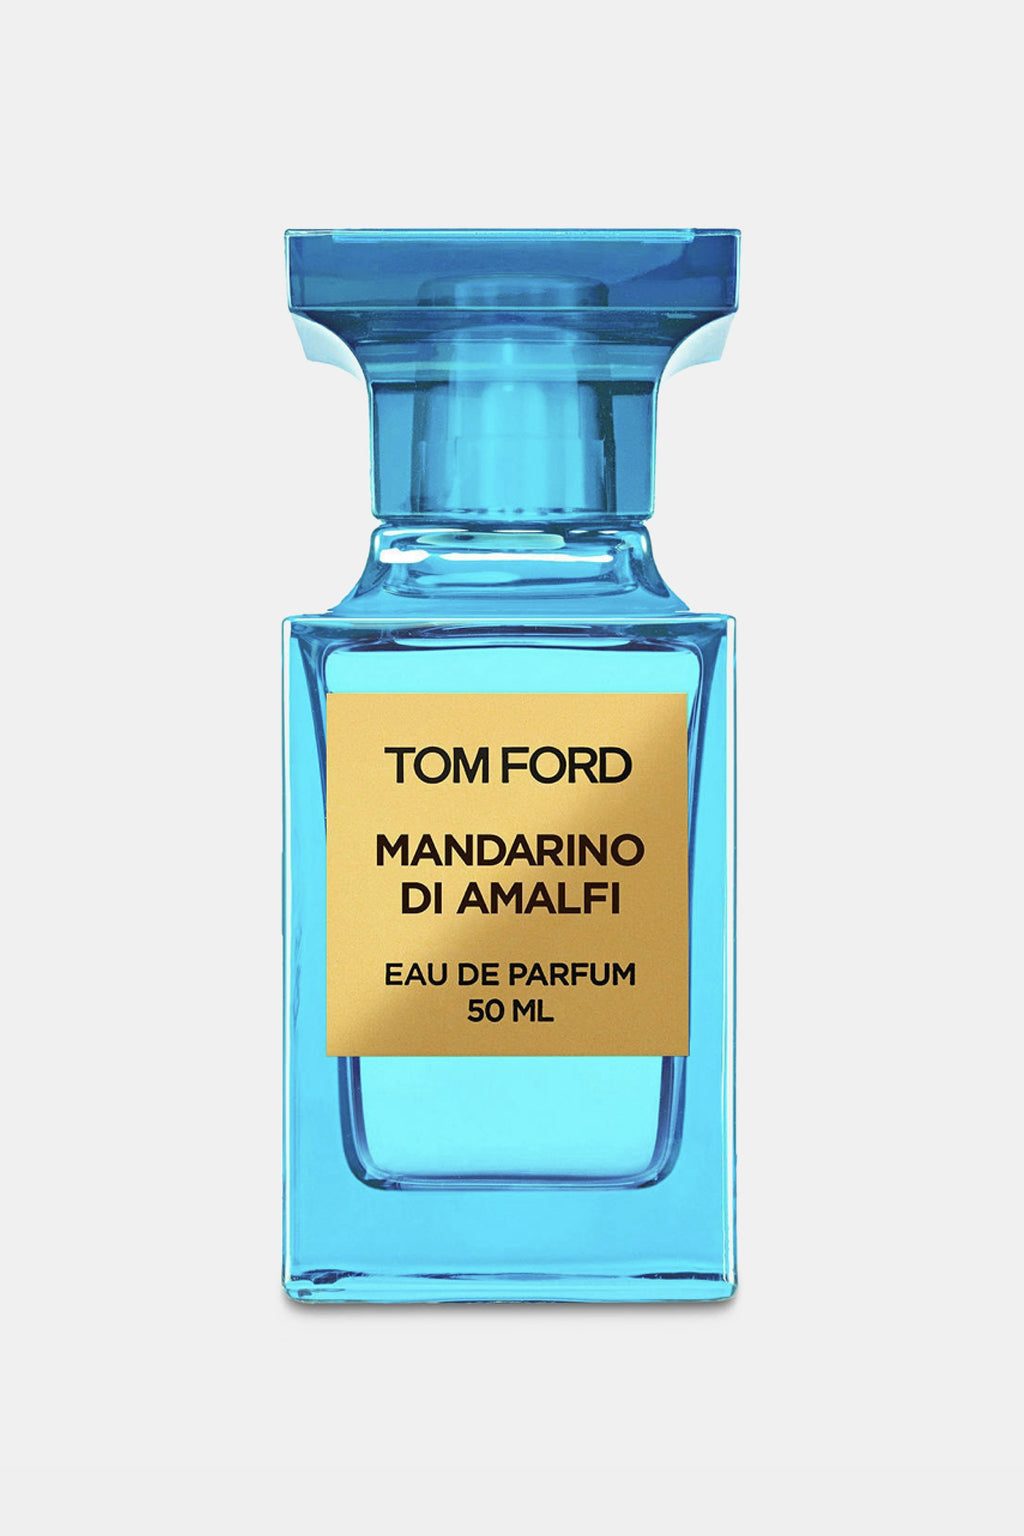 Tom Ford - Mandarino Di Amalfi Eau de Parfum